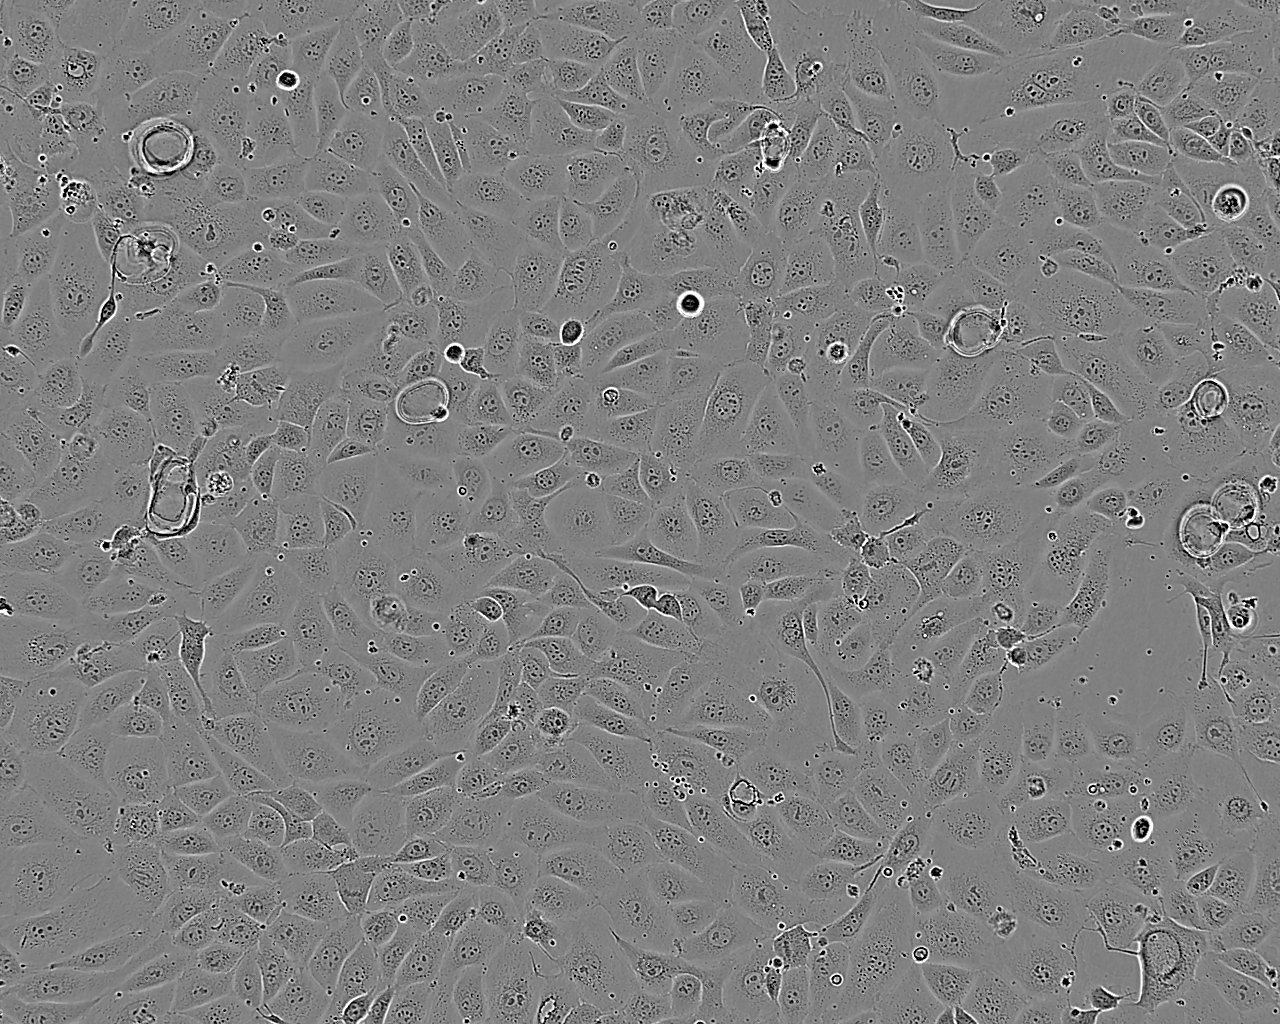 Onda 11 Cells(赠送Str鉴定报告)|人脑神经胶质瘤细胞,Onda 11 Cells